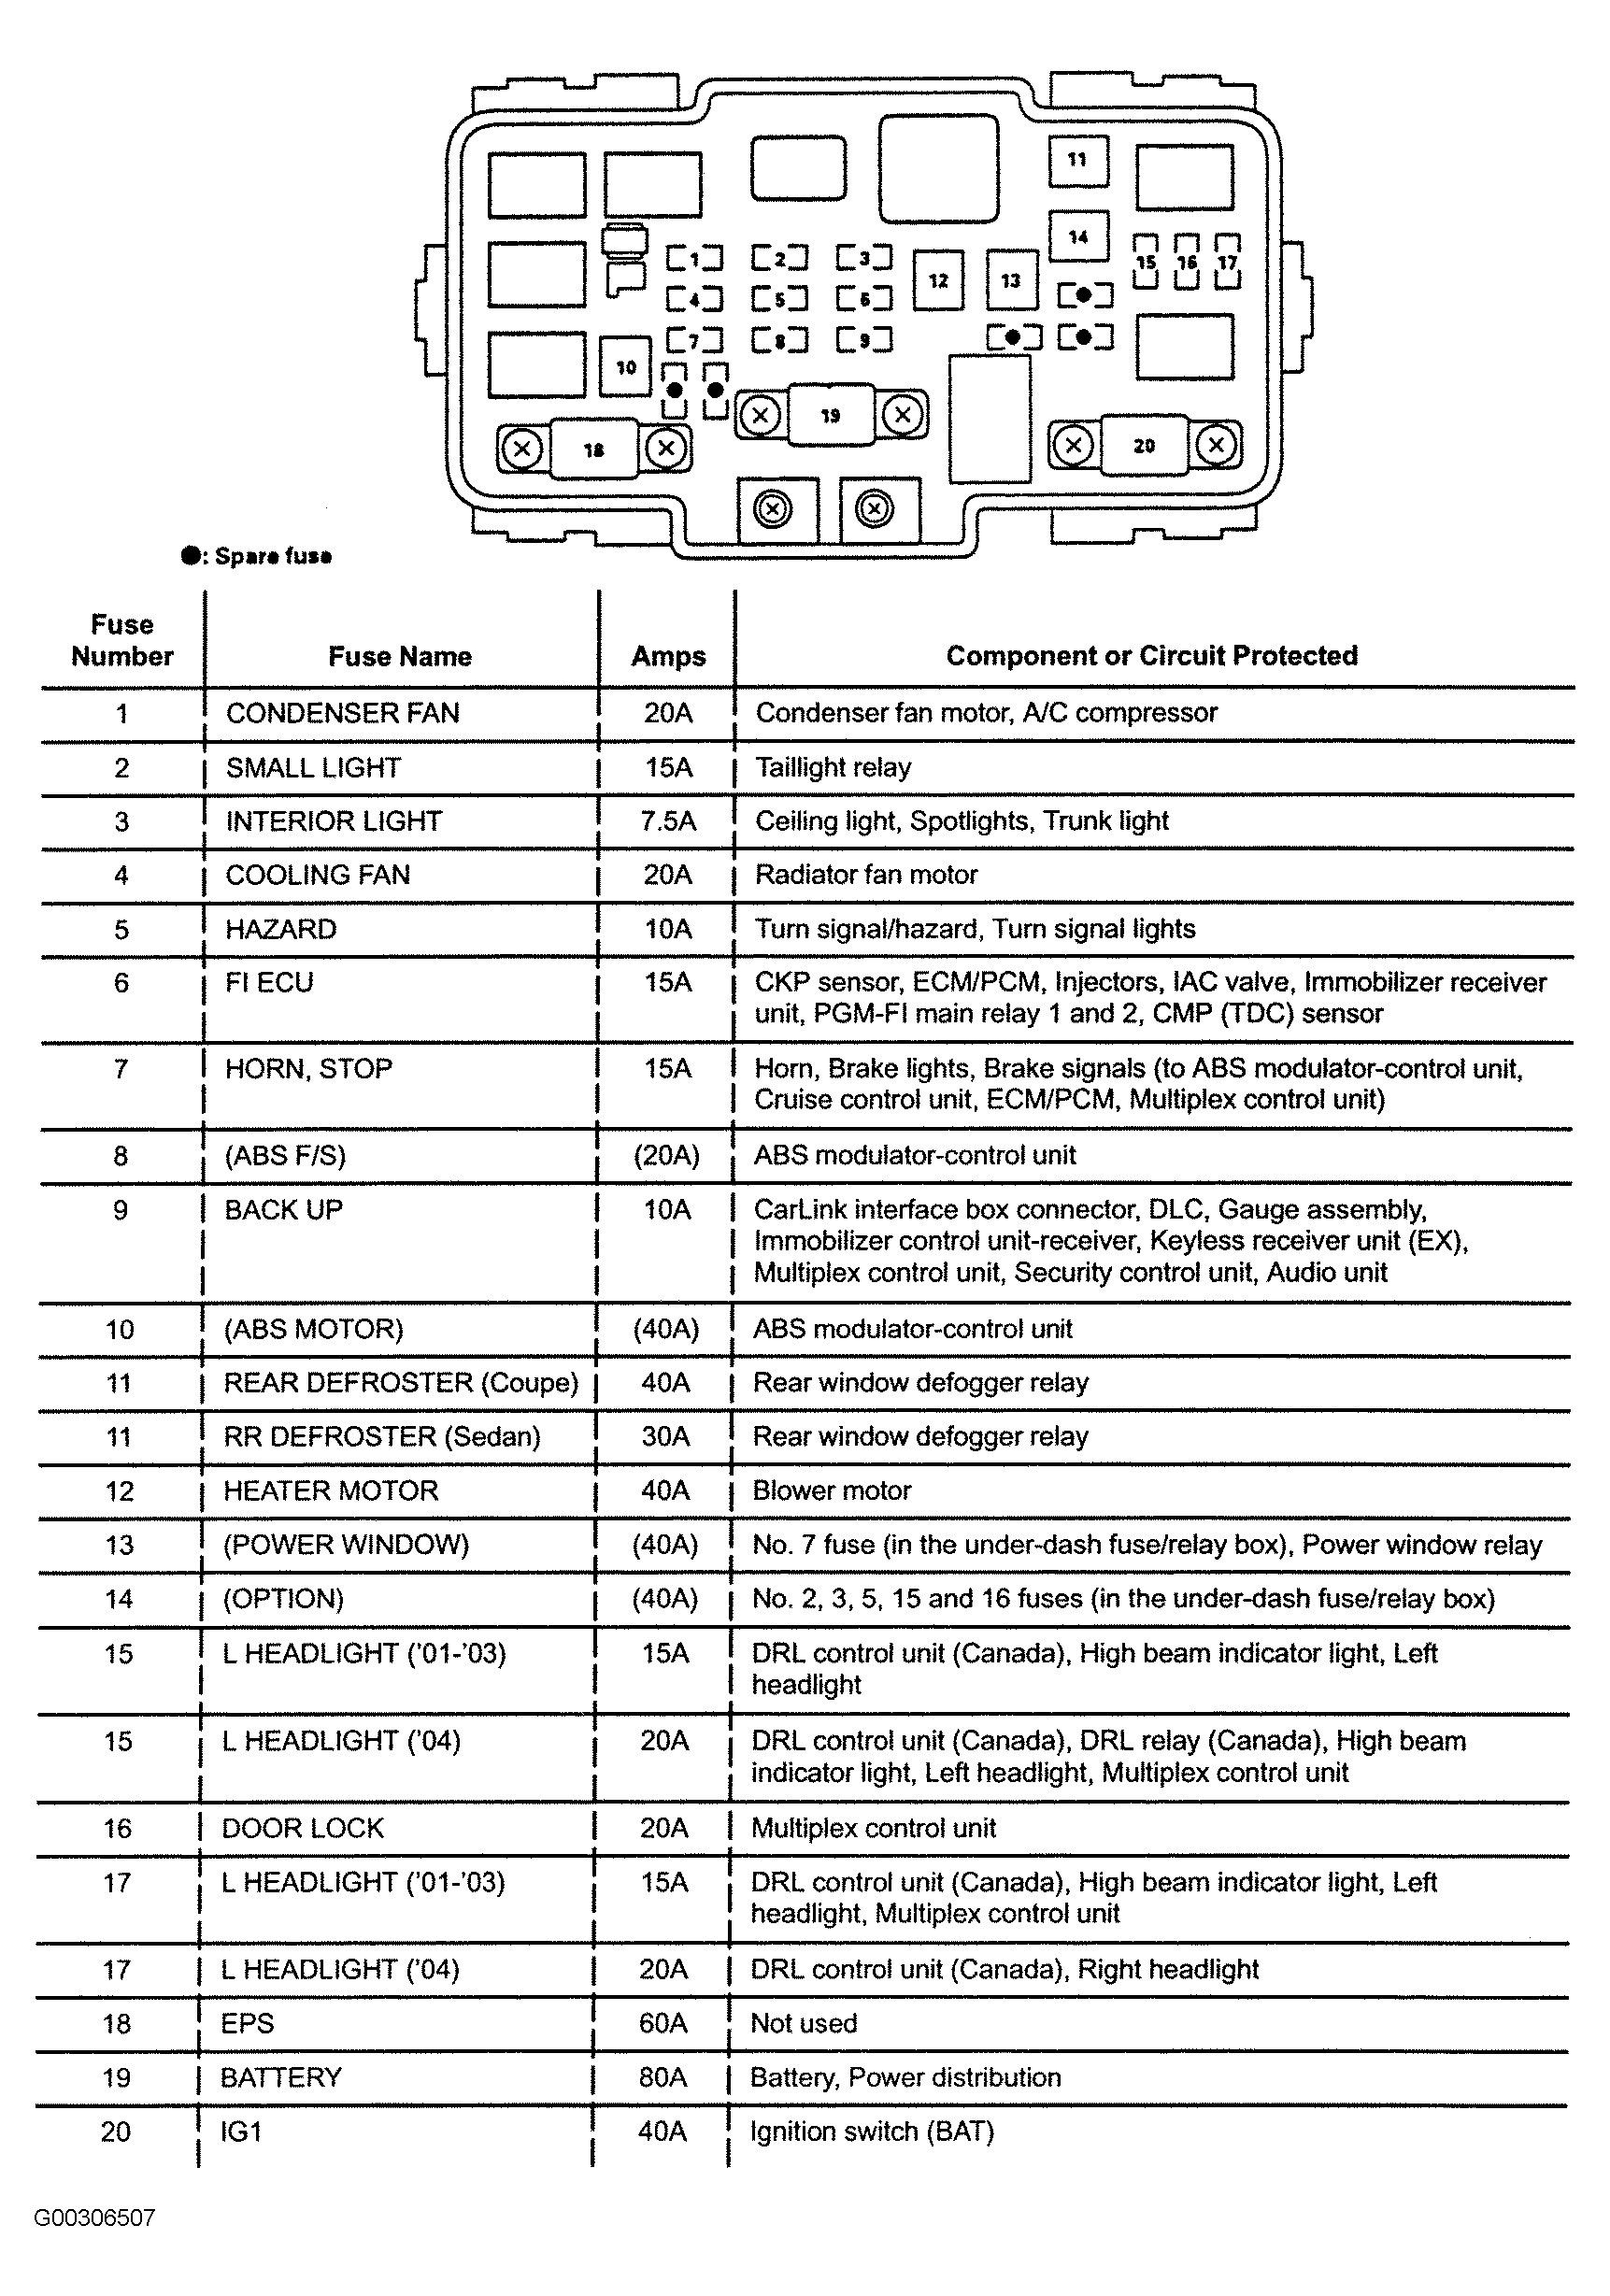 Honda Crv Fuse Box Problems | schematic and wiring diagram